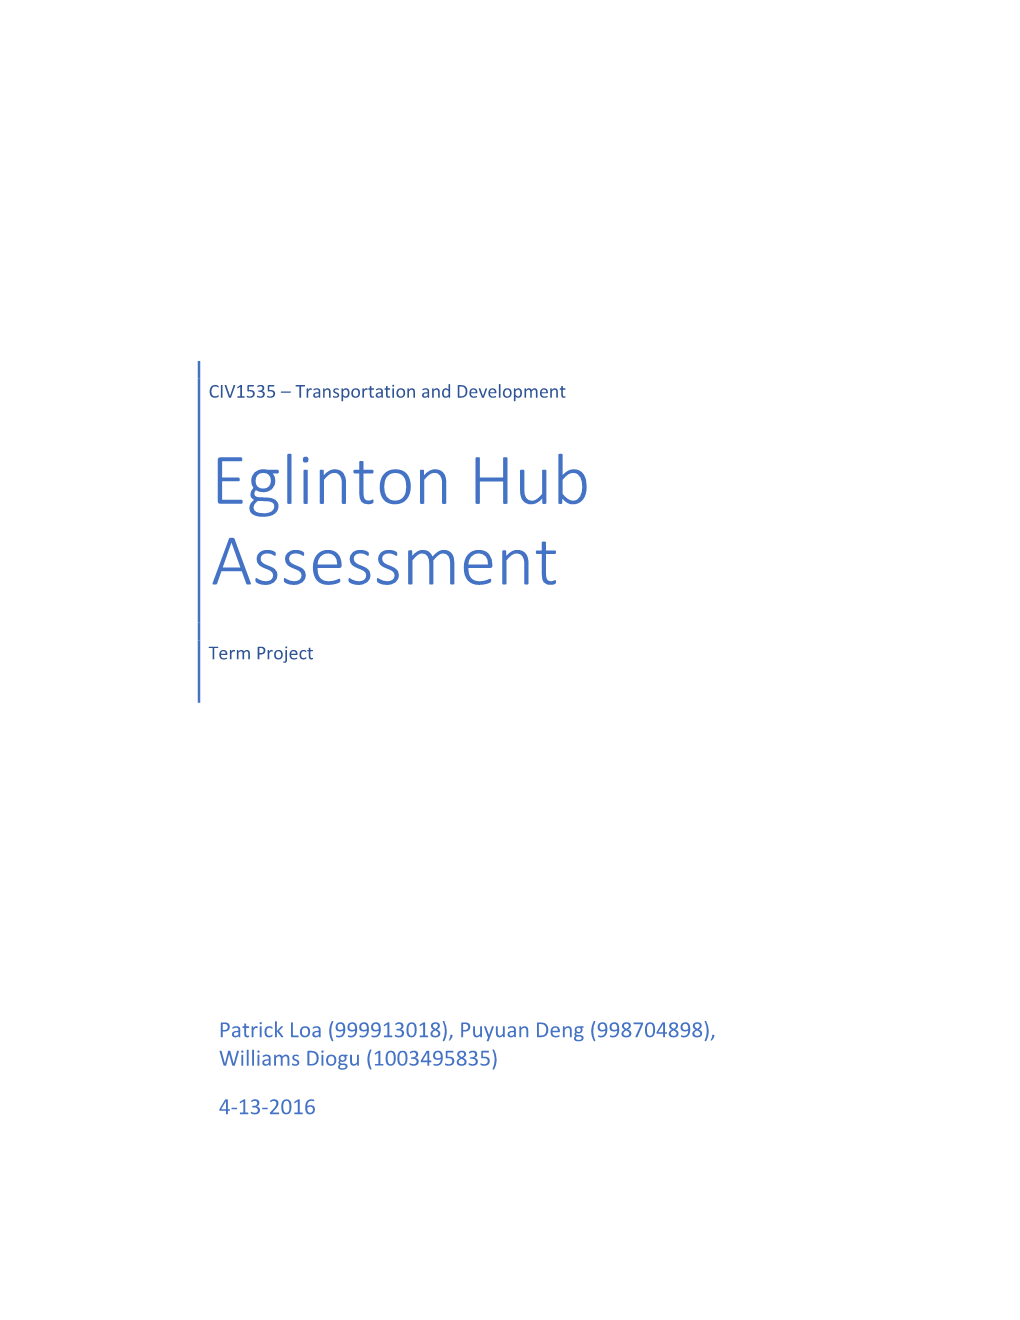 Eglinton Hub Assessment